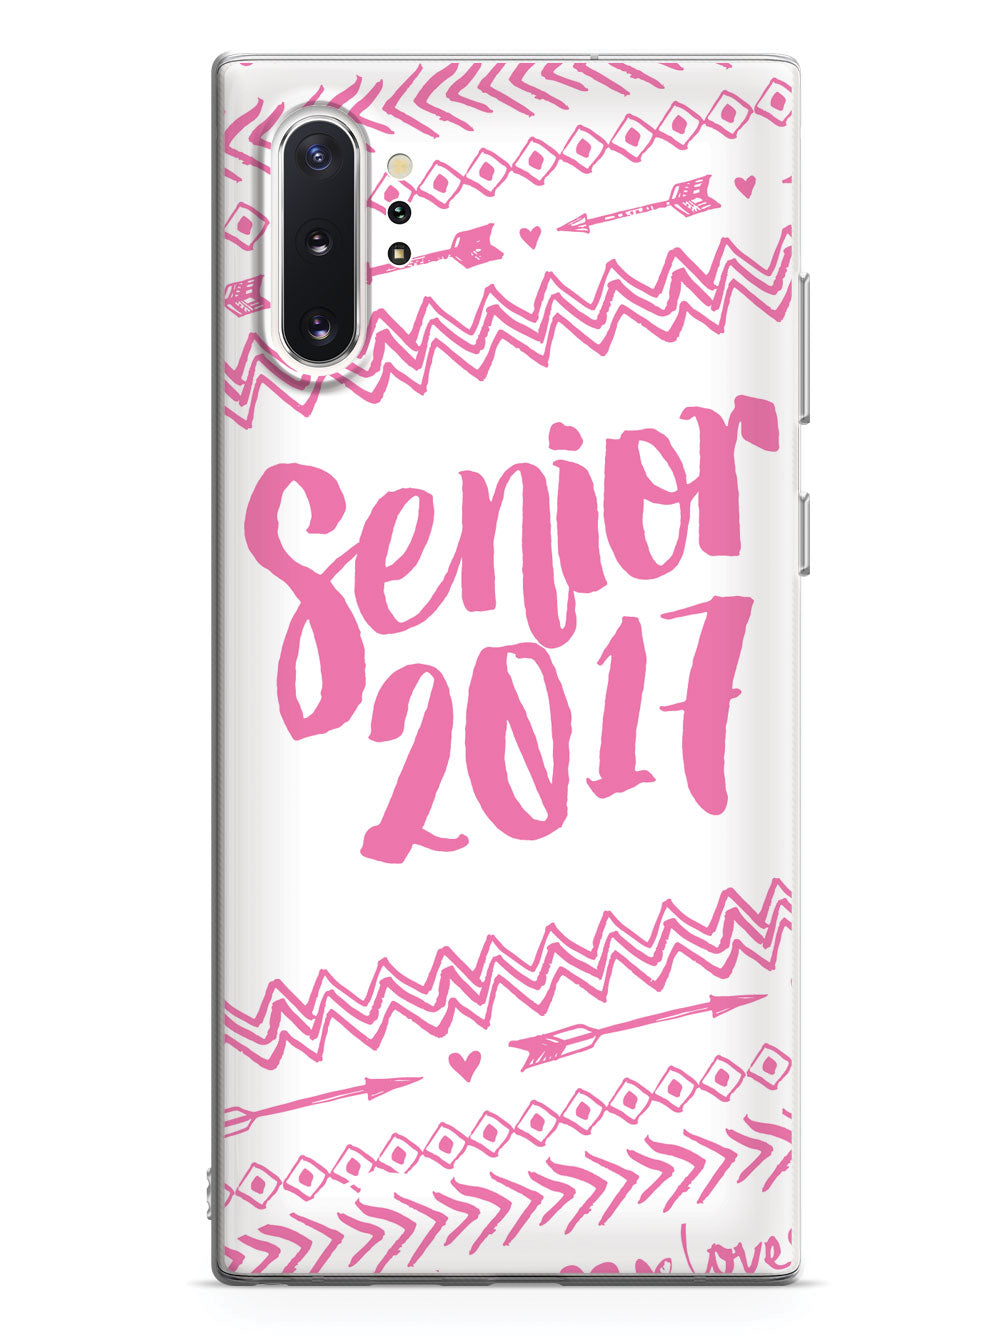 Senior 2017 - Pink Case